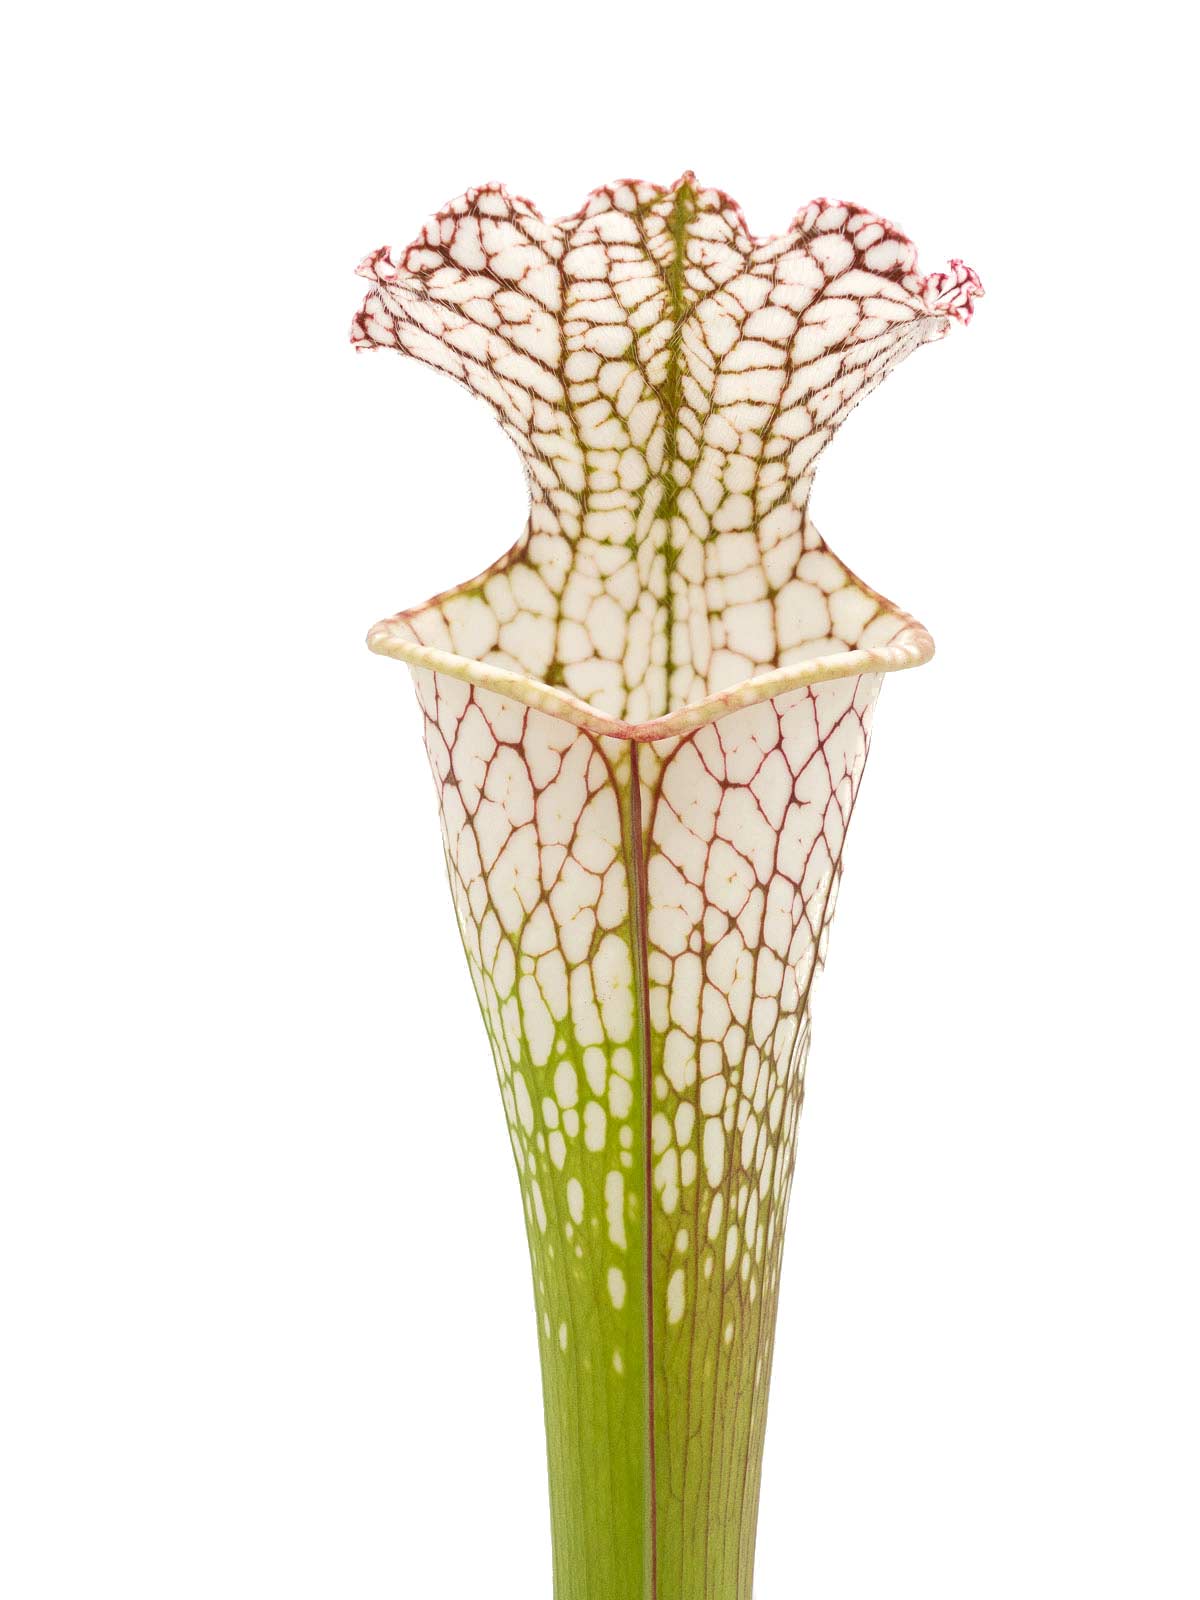 Sarracenia leucophylla - MK L51A, Hosford, Liberty County, Florida